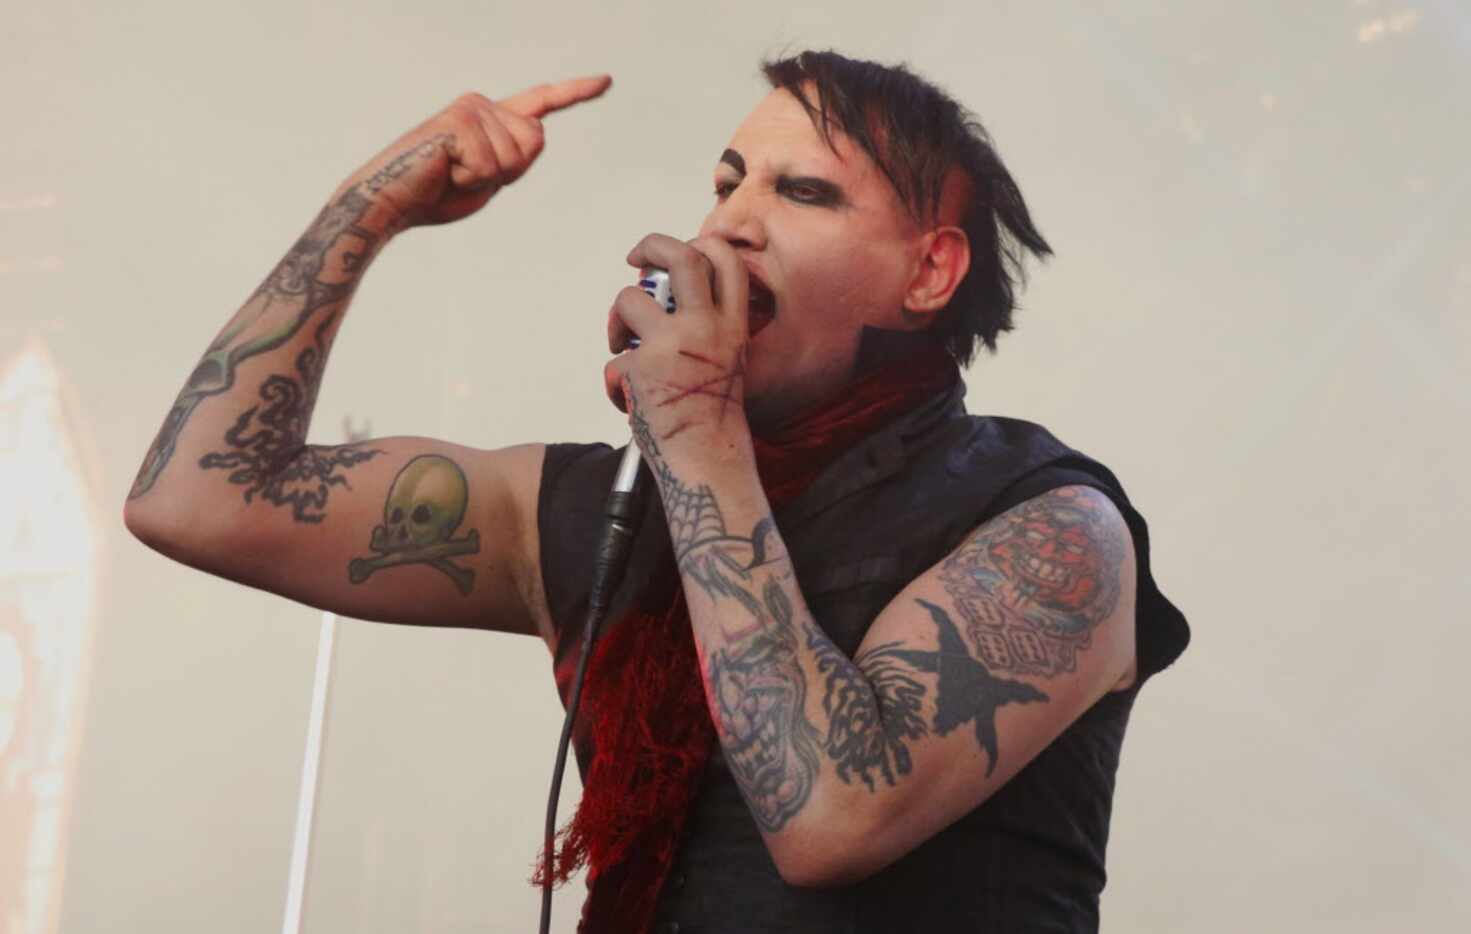 Singer Marilyn Manson performs at Gexa Energy Pavilion Wednesday.